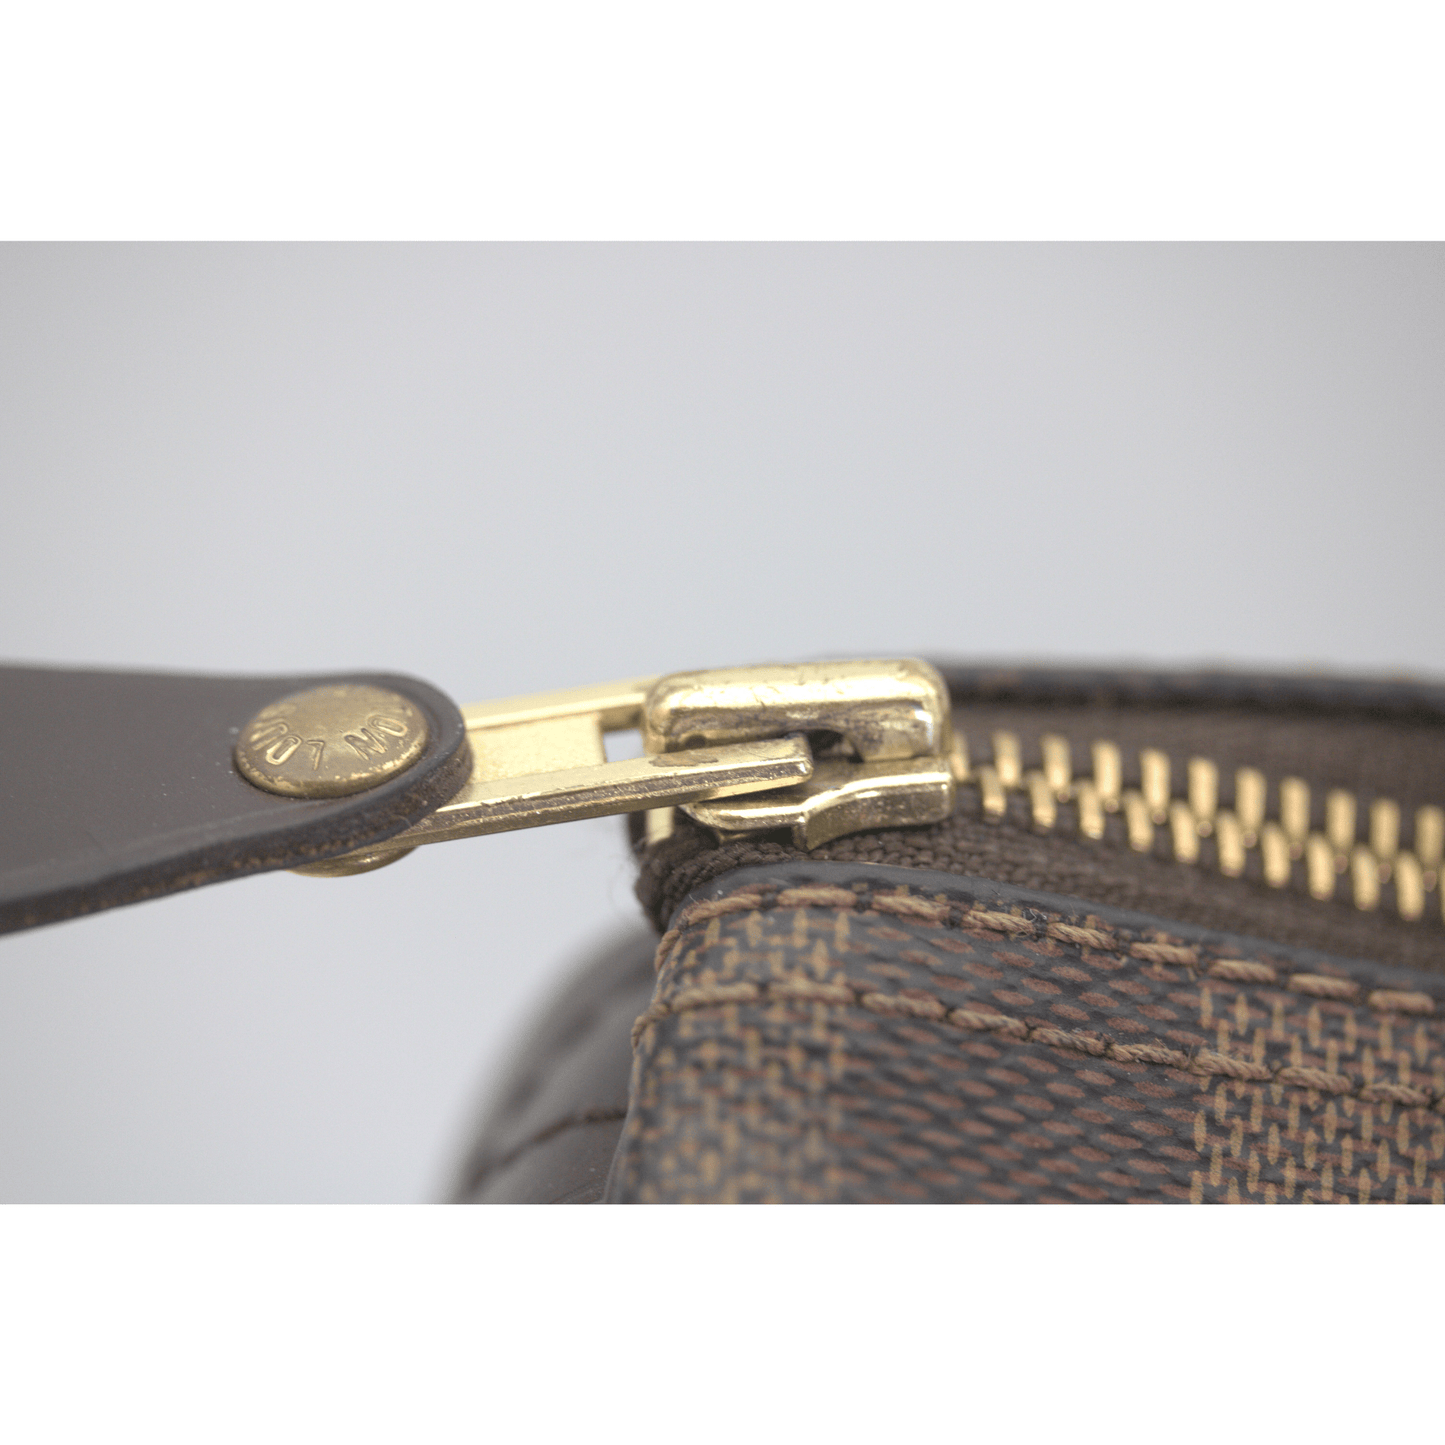 Louis Vuitton Damier Ebene Canvas Speedy Handbag Zipper Close Up